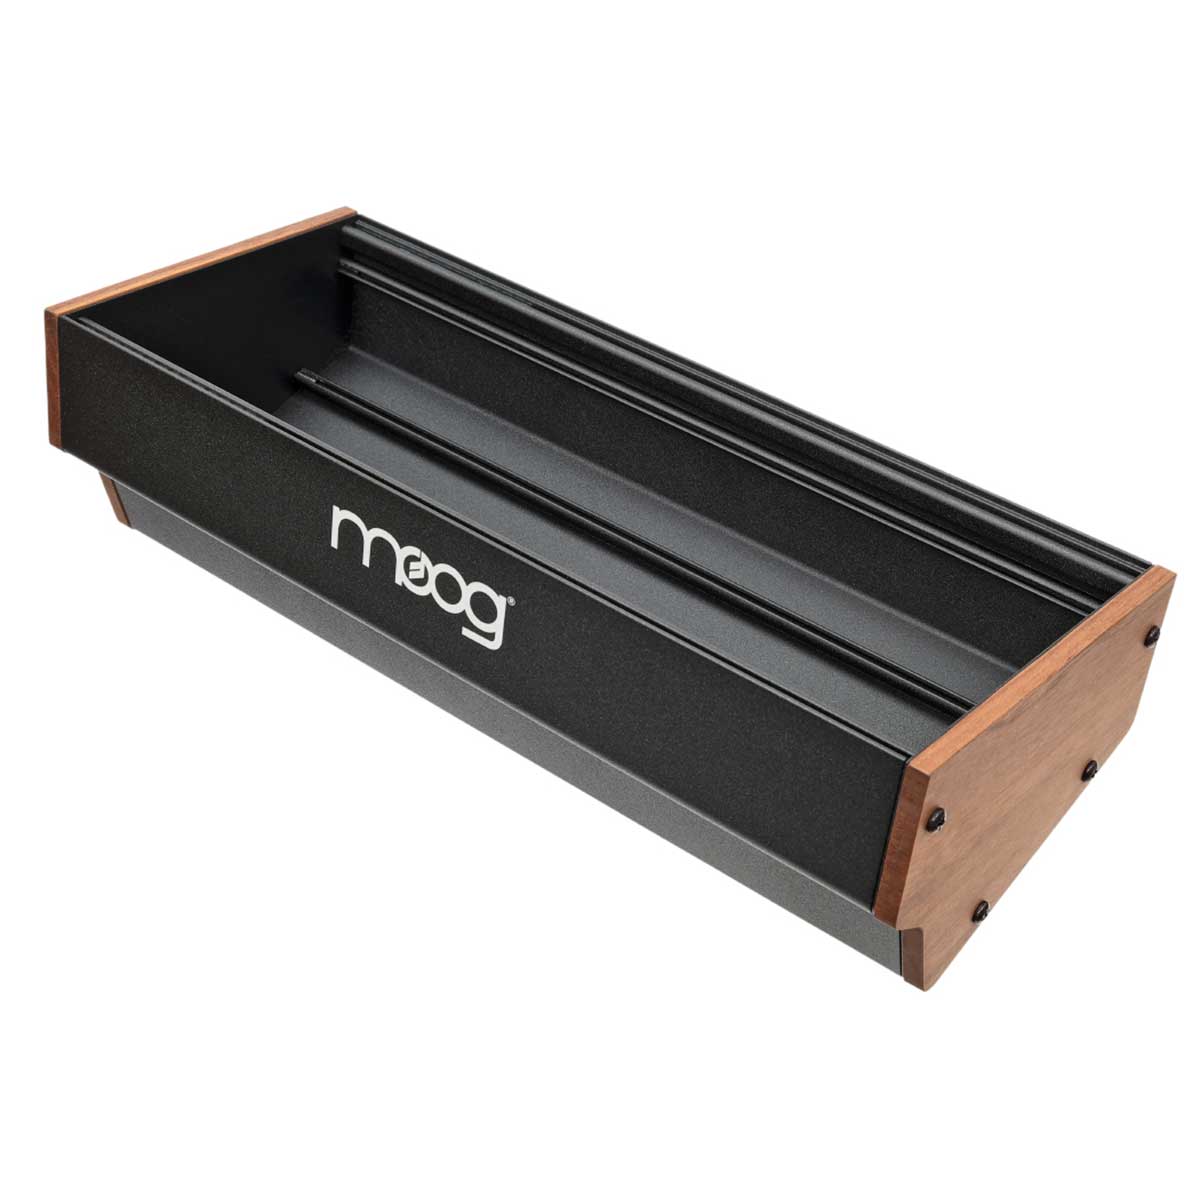 Moog 60 HP Eurorack Case по цене 13 440.00 ₽